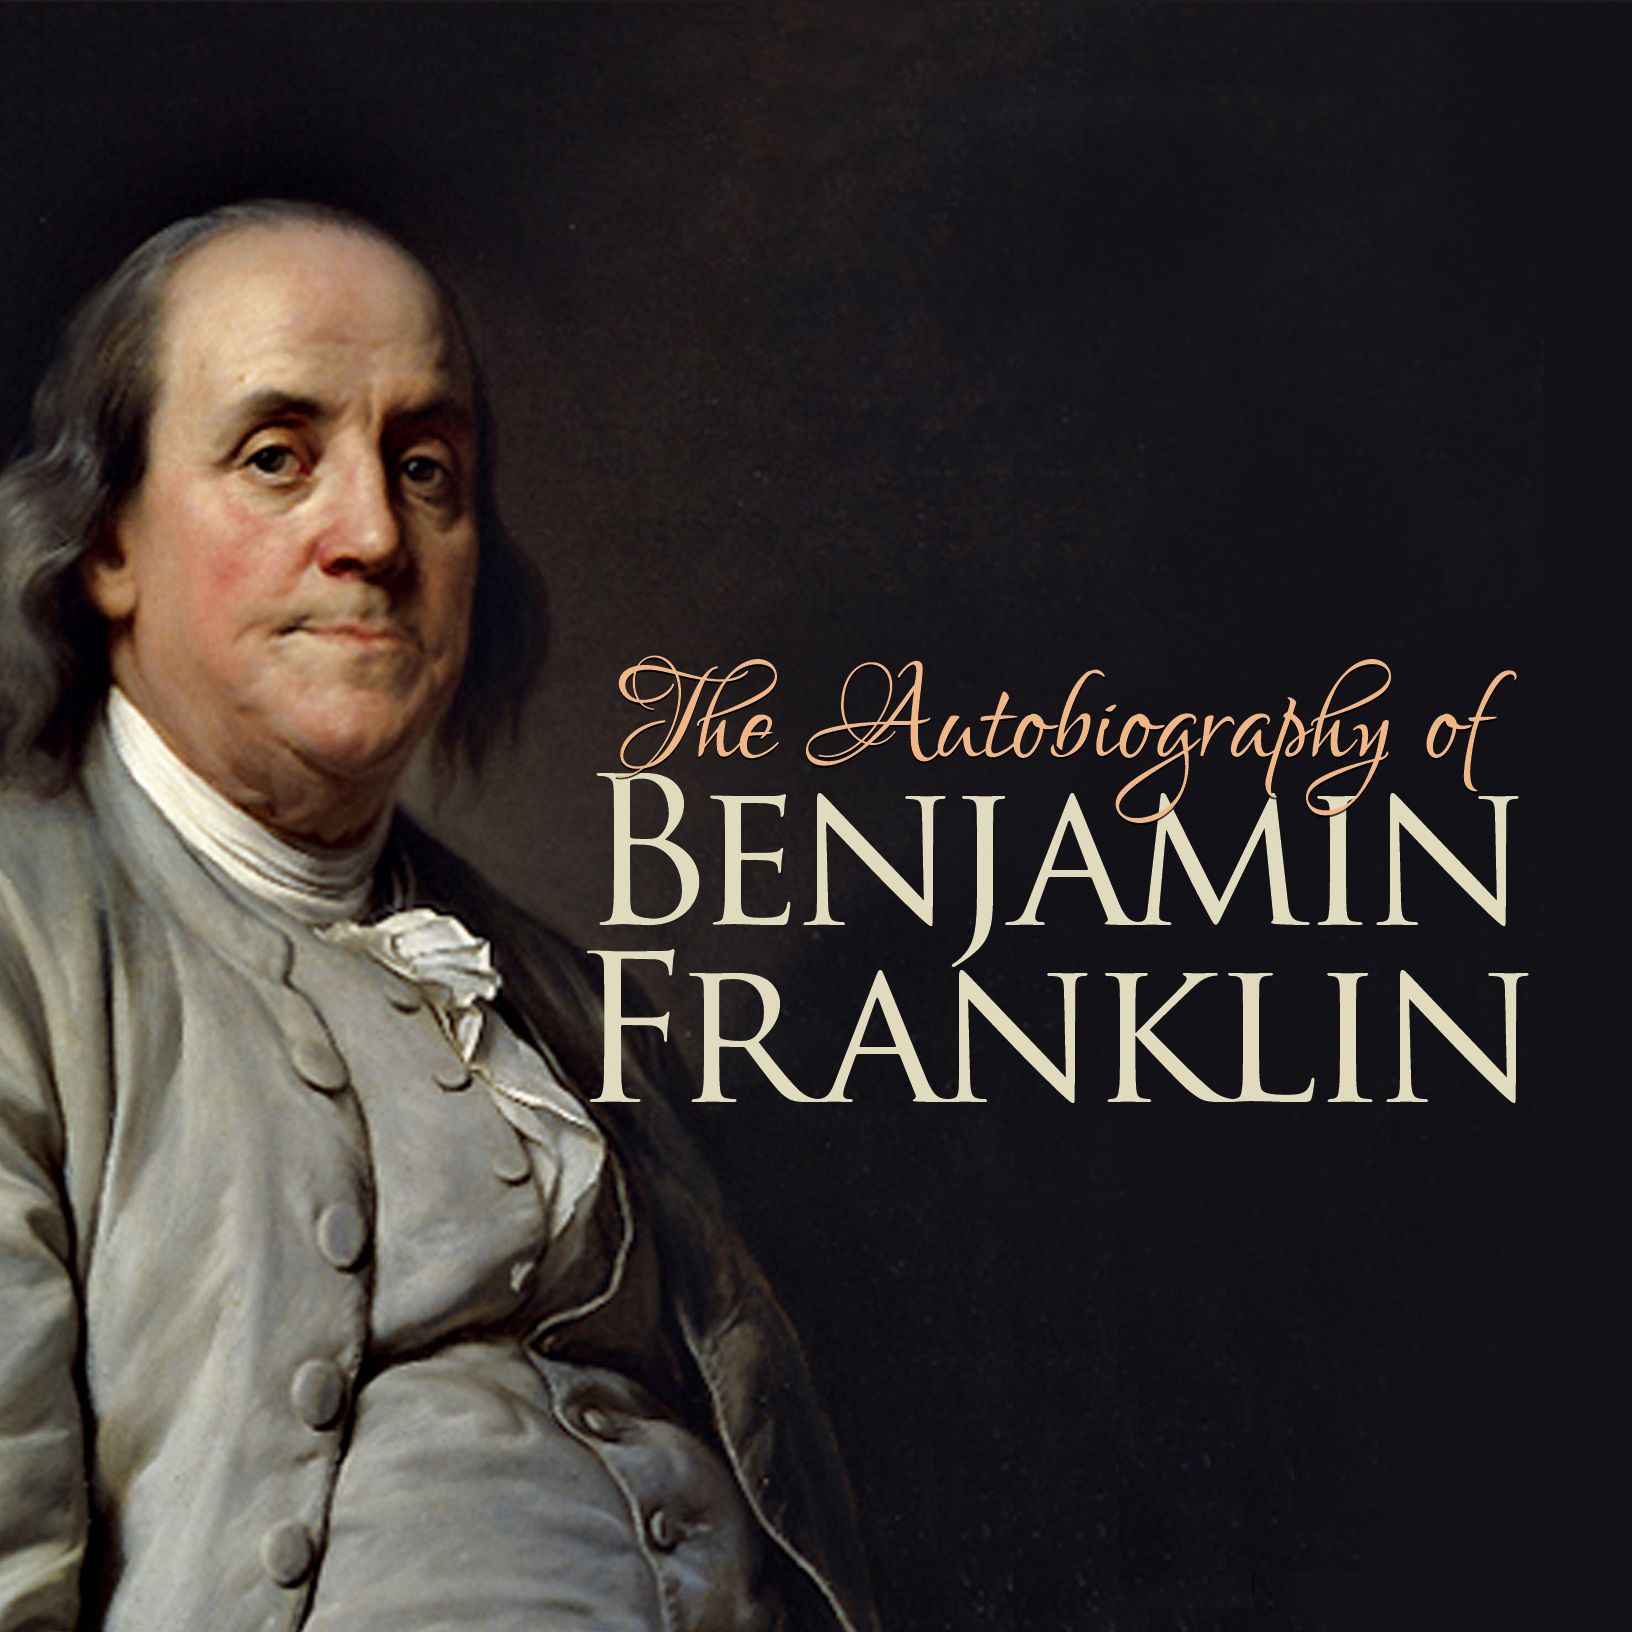 A funny story of Benjamin Franklin